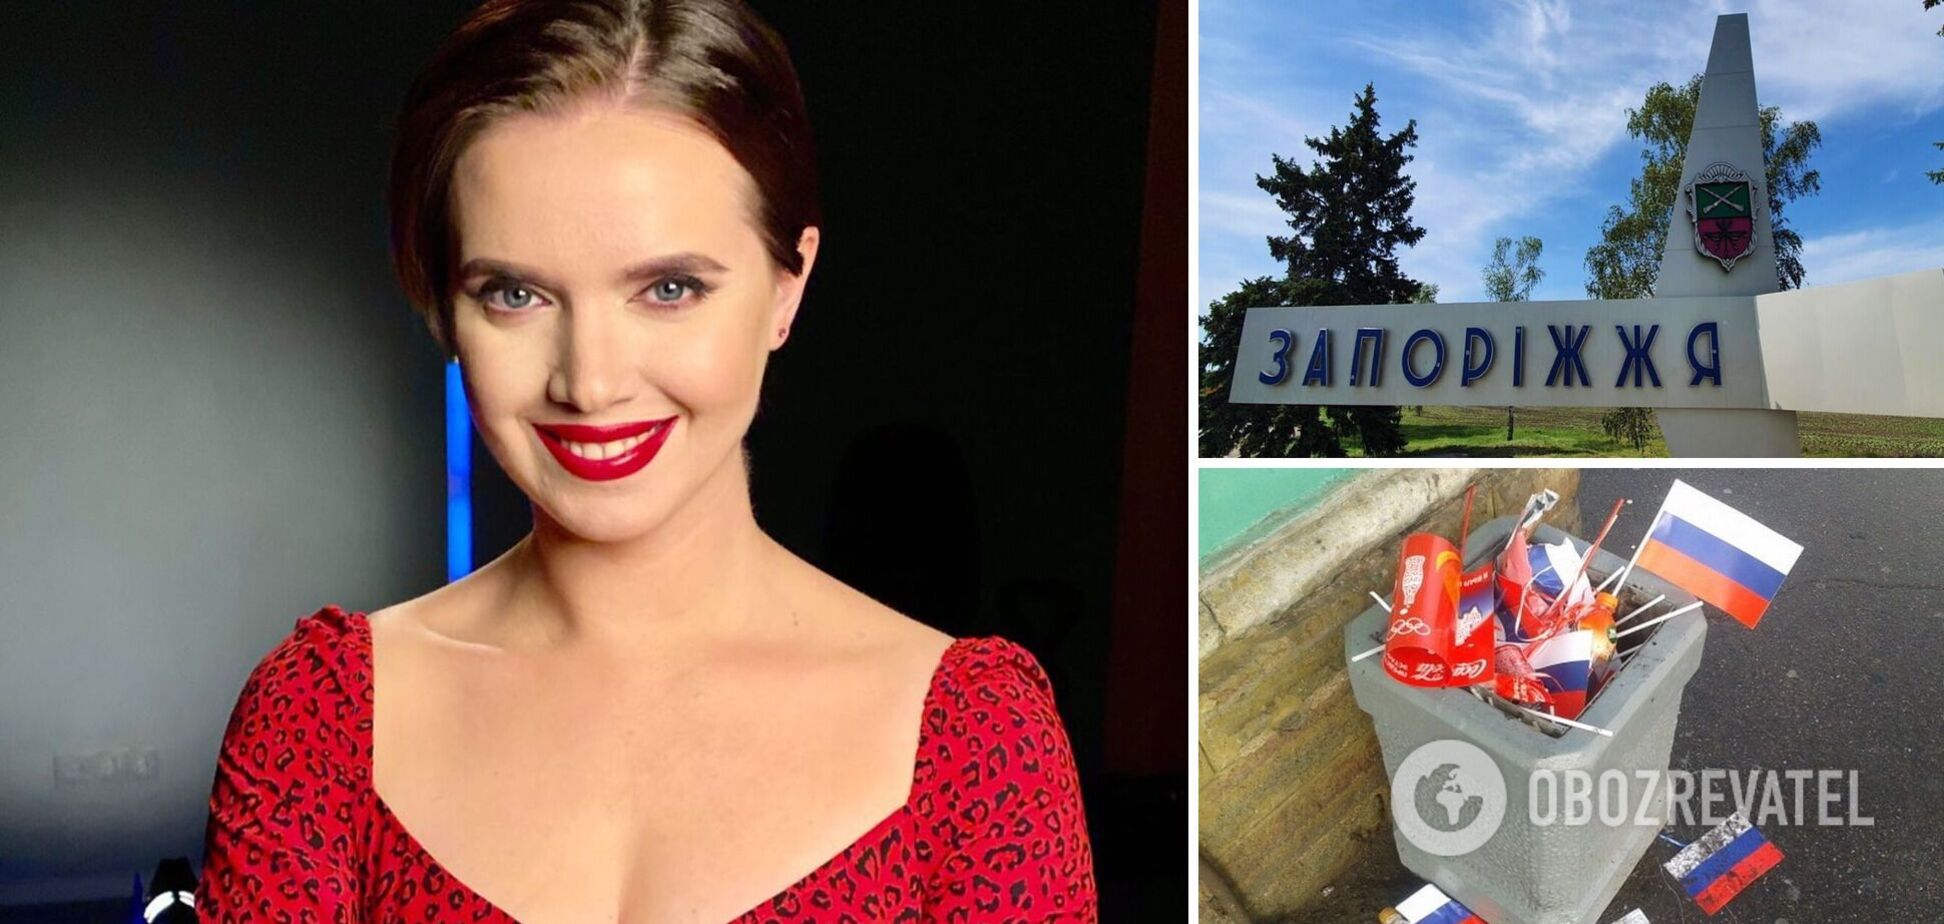 Яніна Соколова зізналась, як у 2000 році в Запоріжжі прославляла Росію. Відео